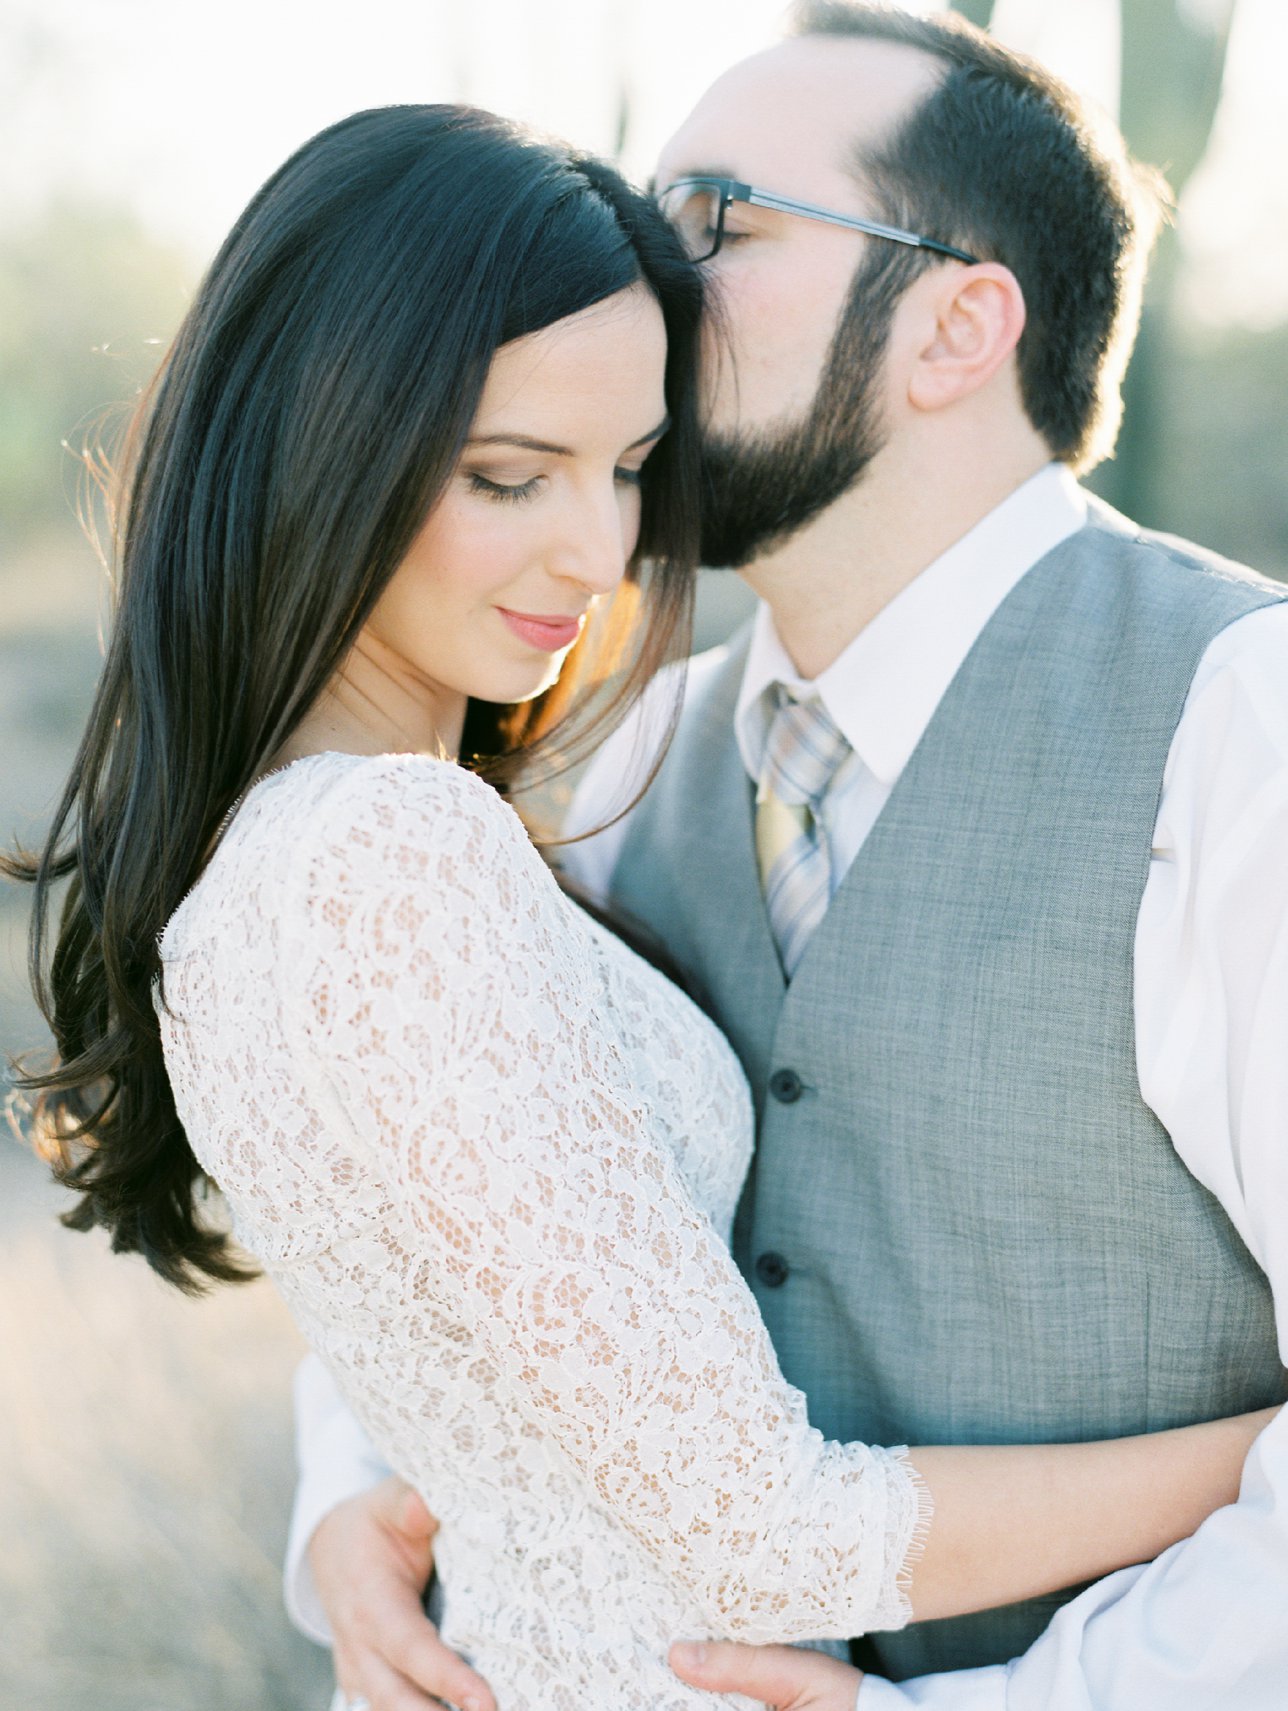 Arizona Desert engagement photos - Rachel Solomon Photography Blog - Phoenix Wedding Photographer